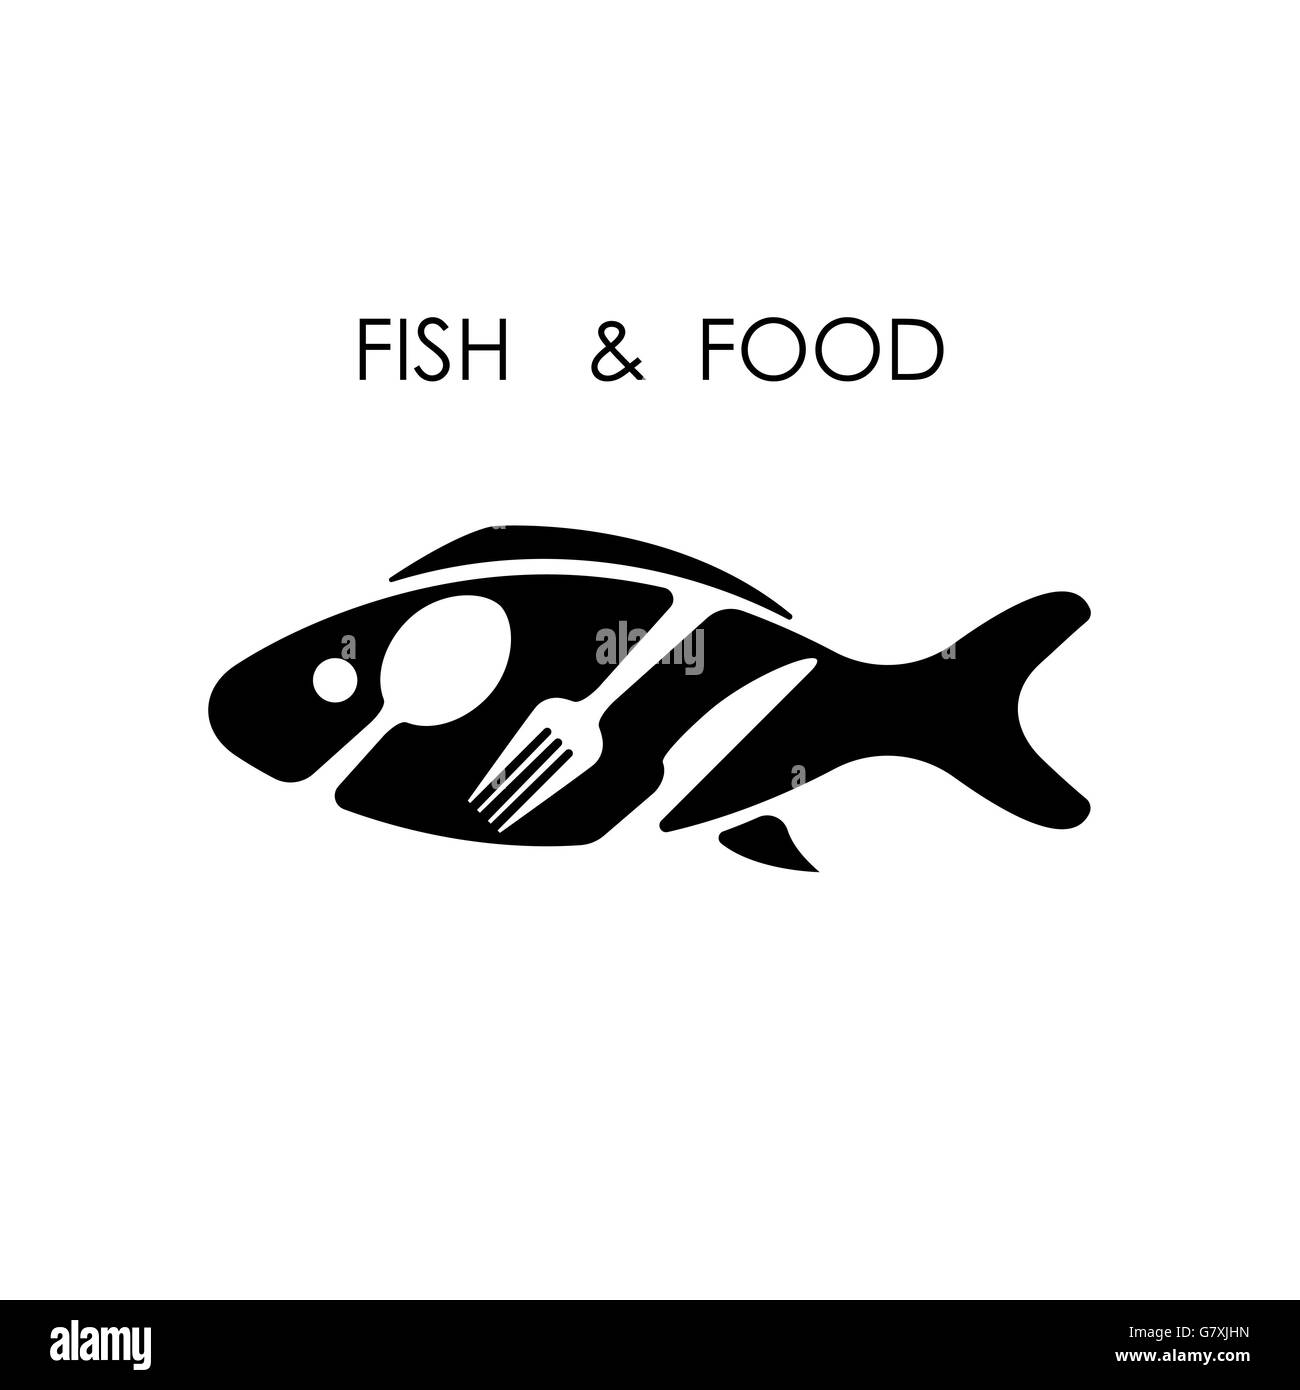 Fish,spoon,fork and knife icon.Fish & food logo design vector icon.Fish & food restaurant menu icon.Vector Illustration Stock Vector